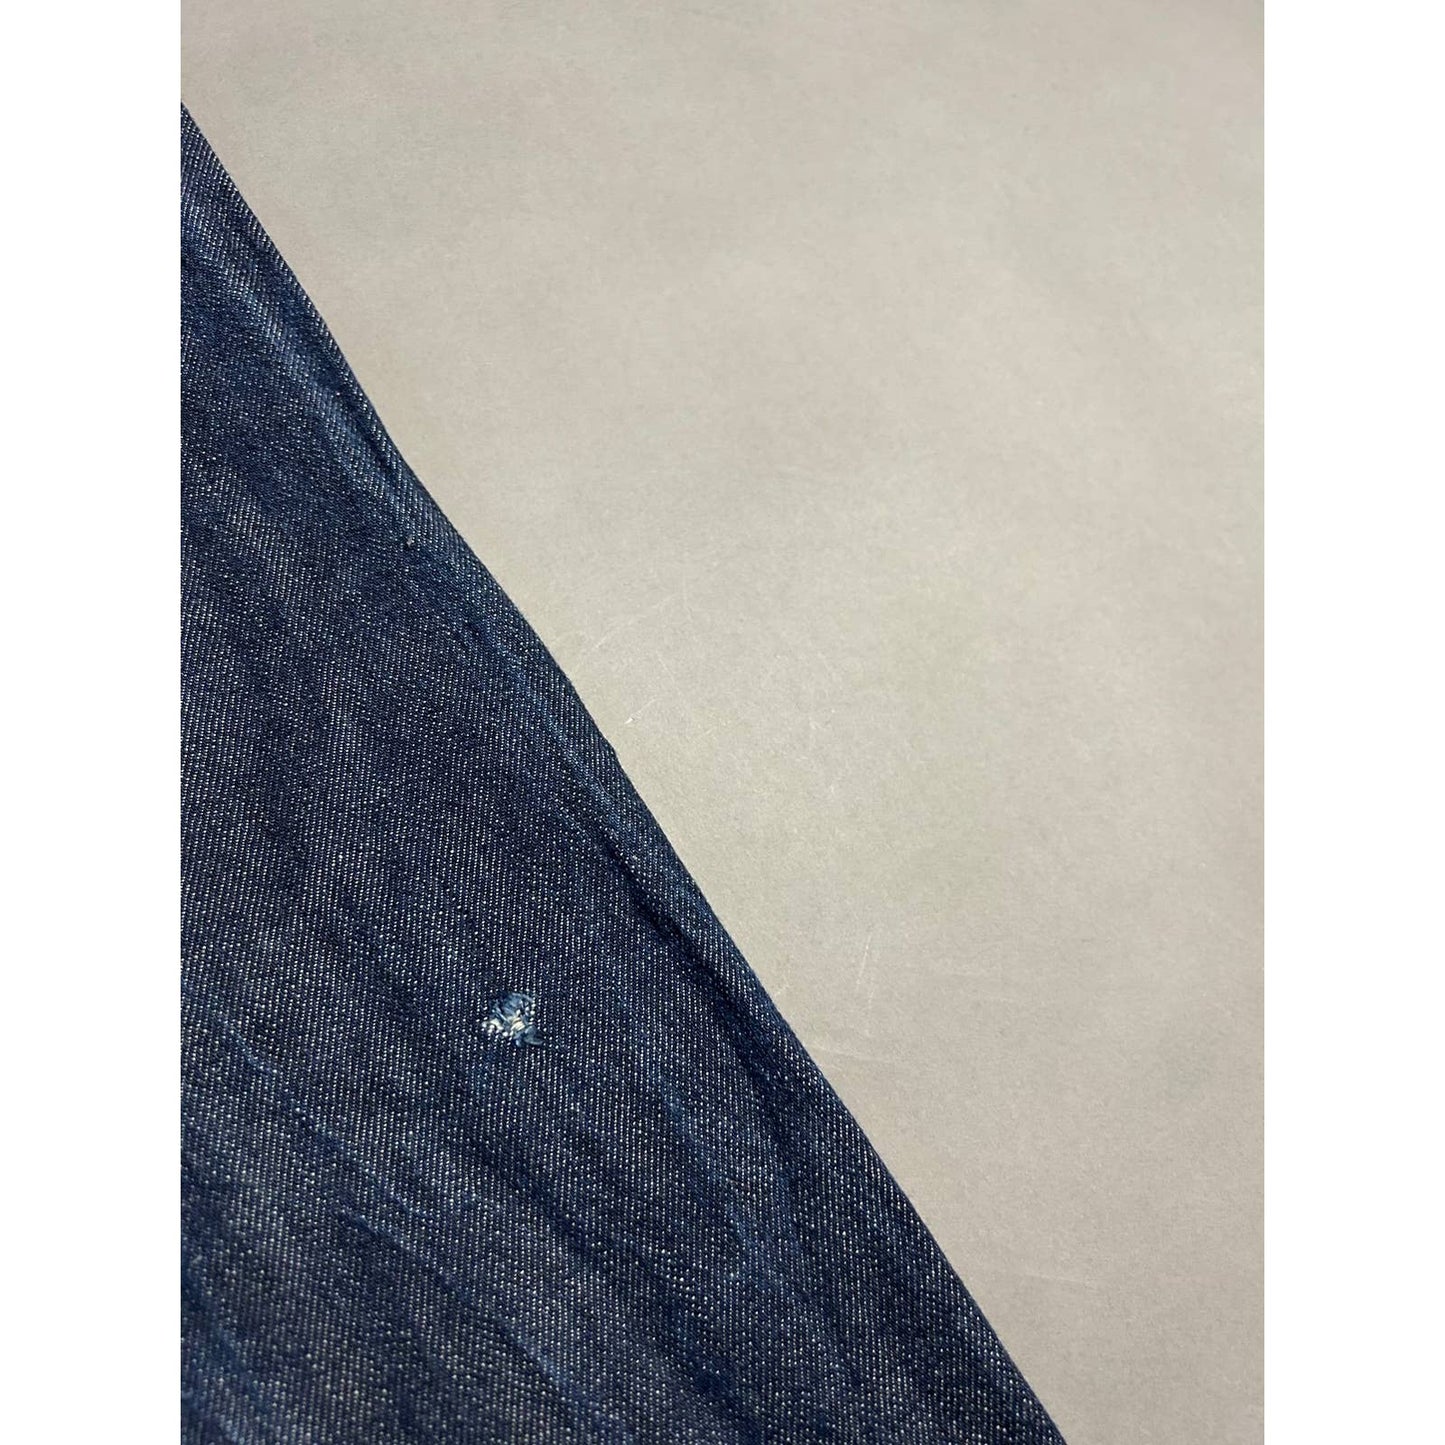 Evisu vintage jeans navy blue seagulls selvedge